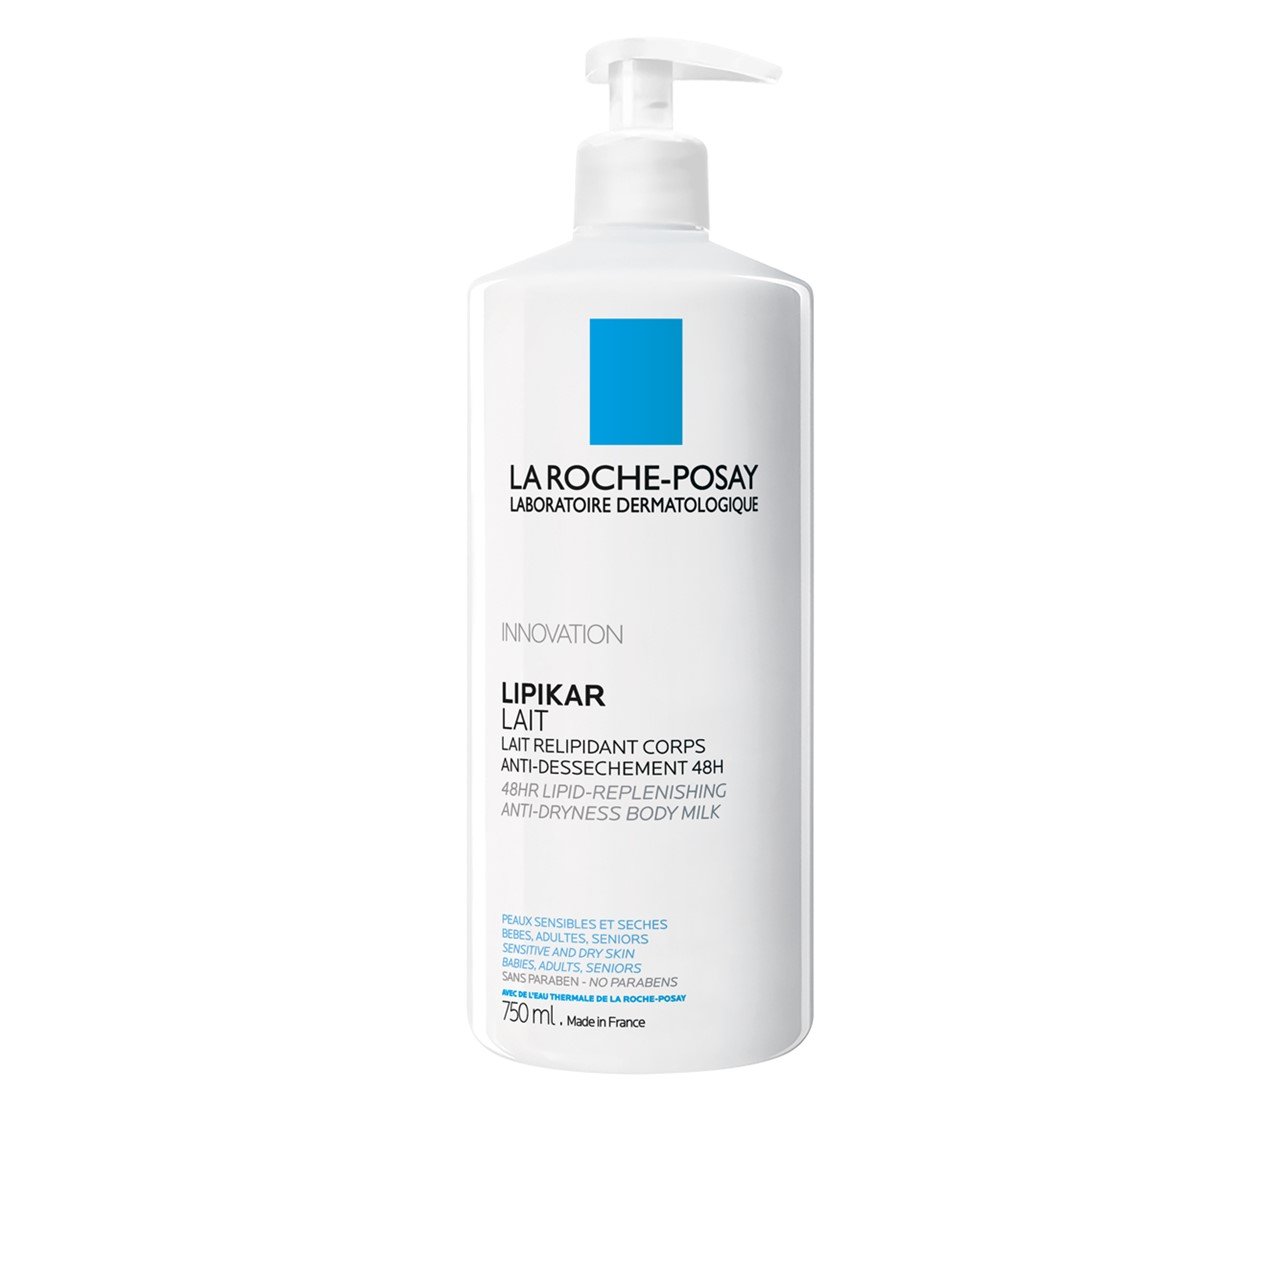 La Roche-Posay Lipikar Lipid-Replenishing Body Milk 750ml (25.36fl oz)